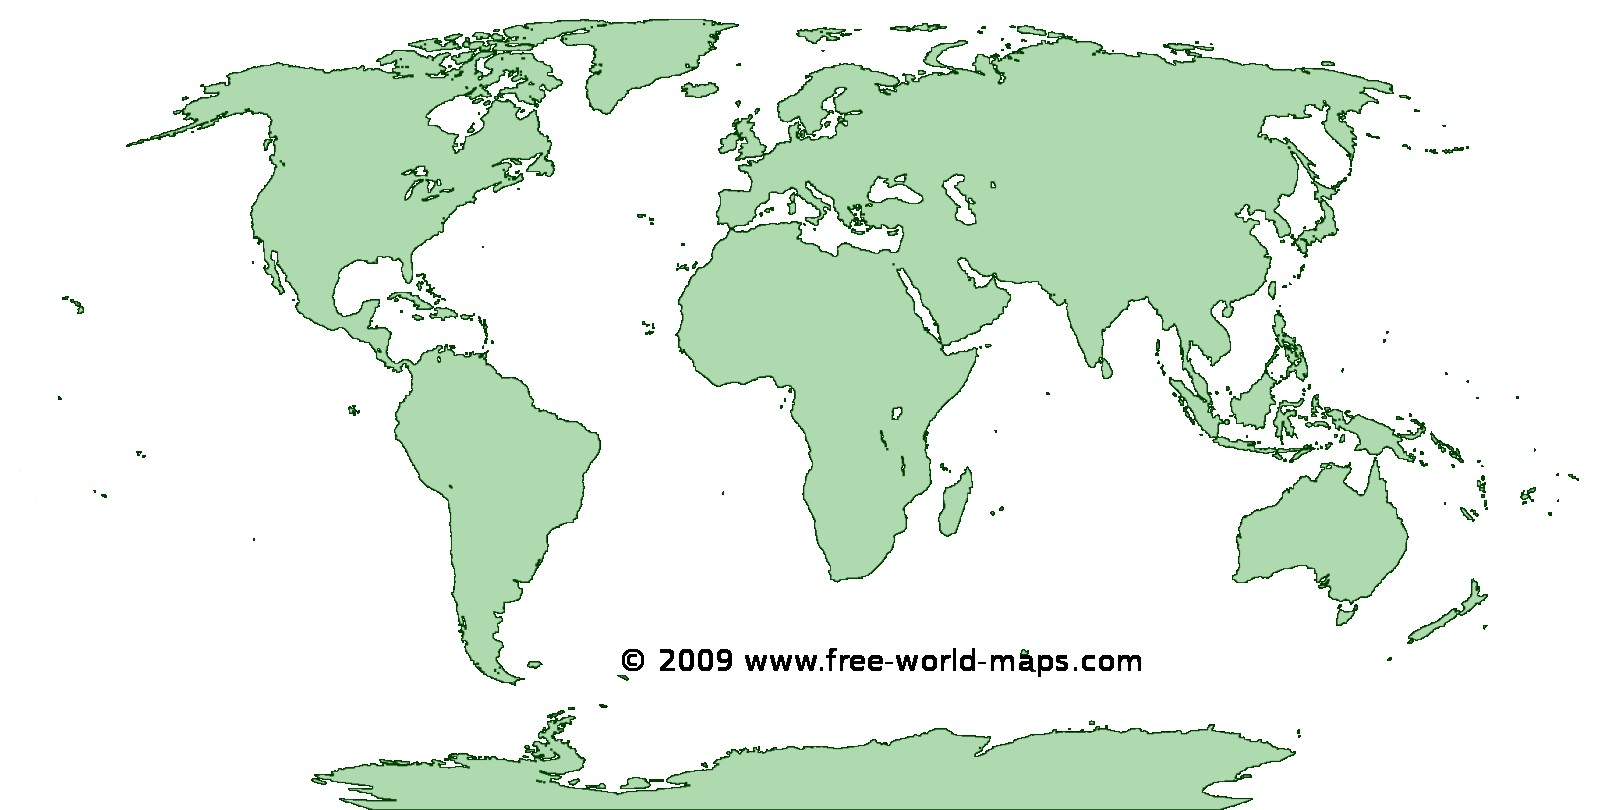 Printable World Map Free - Maplewebandpc - Free Printable World Map Images